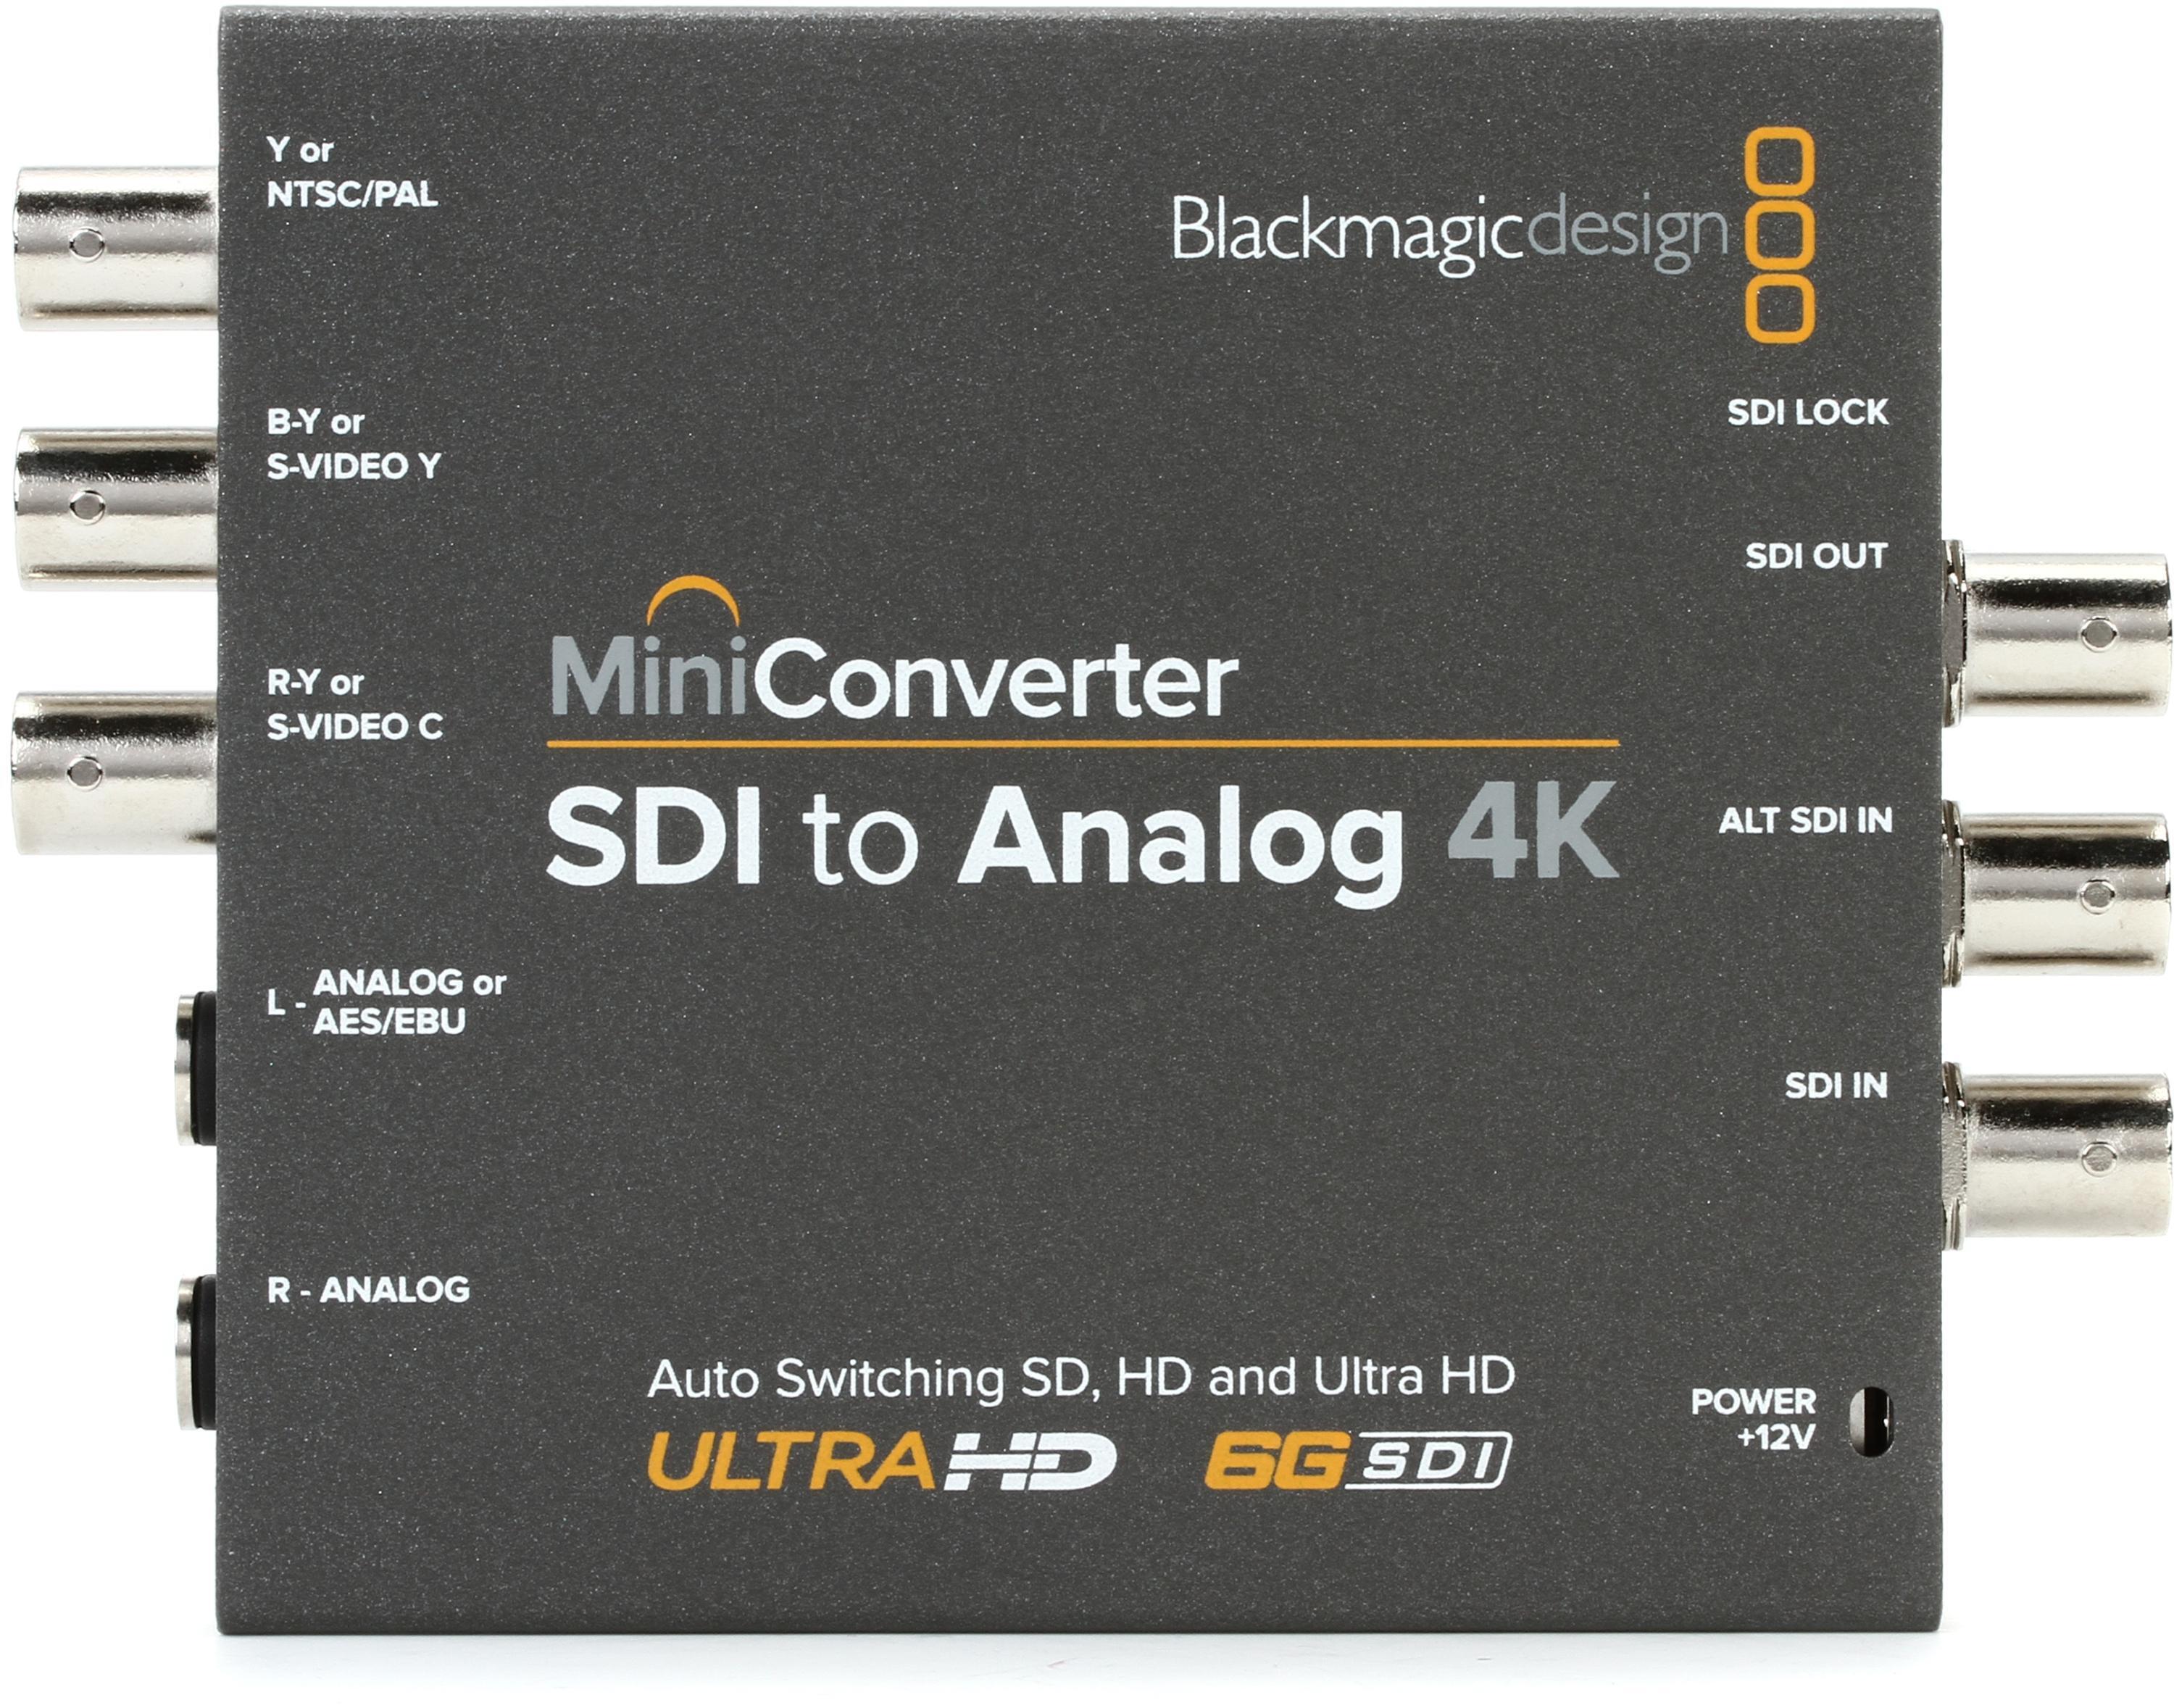 Blackmagic Design Mini Converter - SDI to Analog 4K | Sweetwater